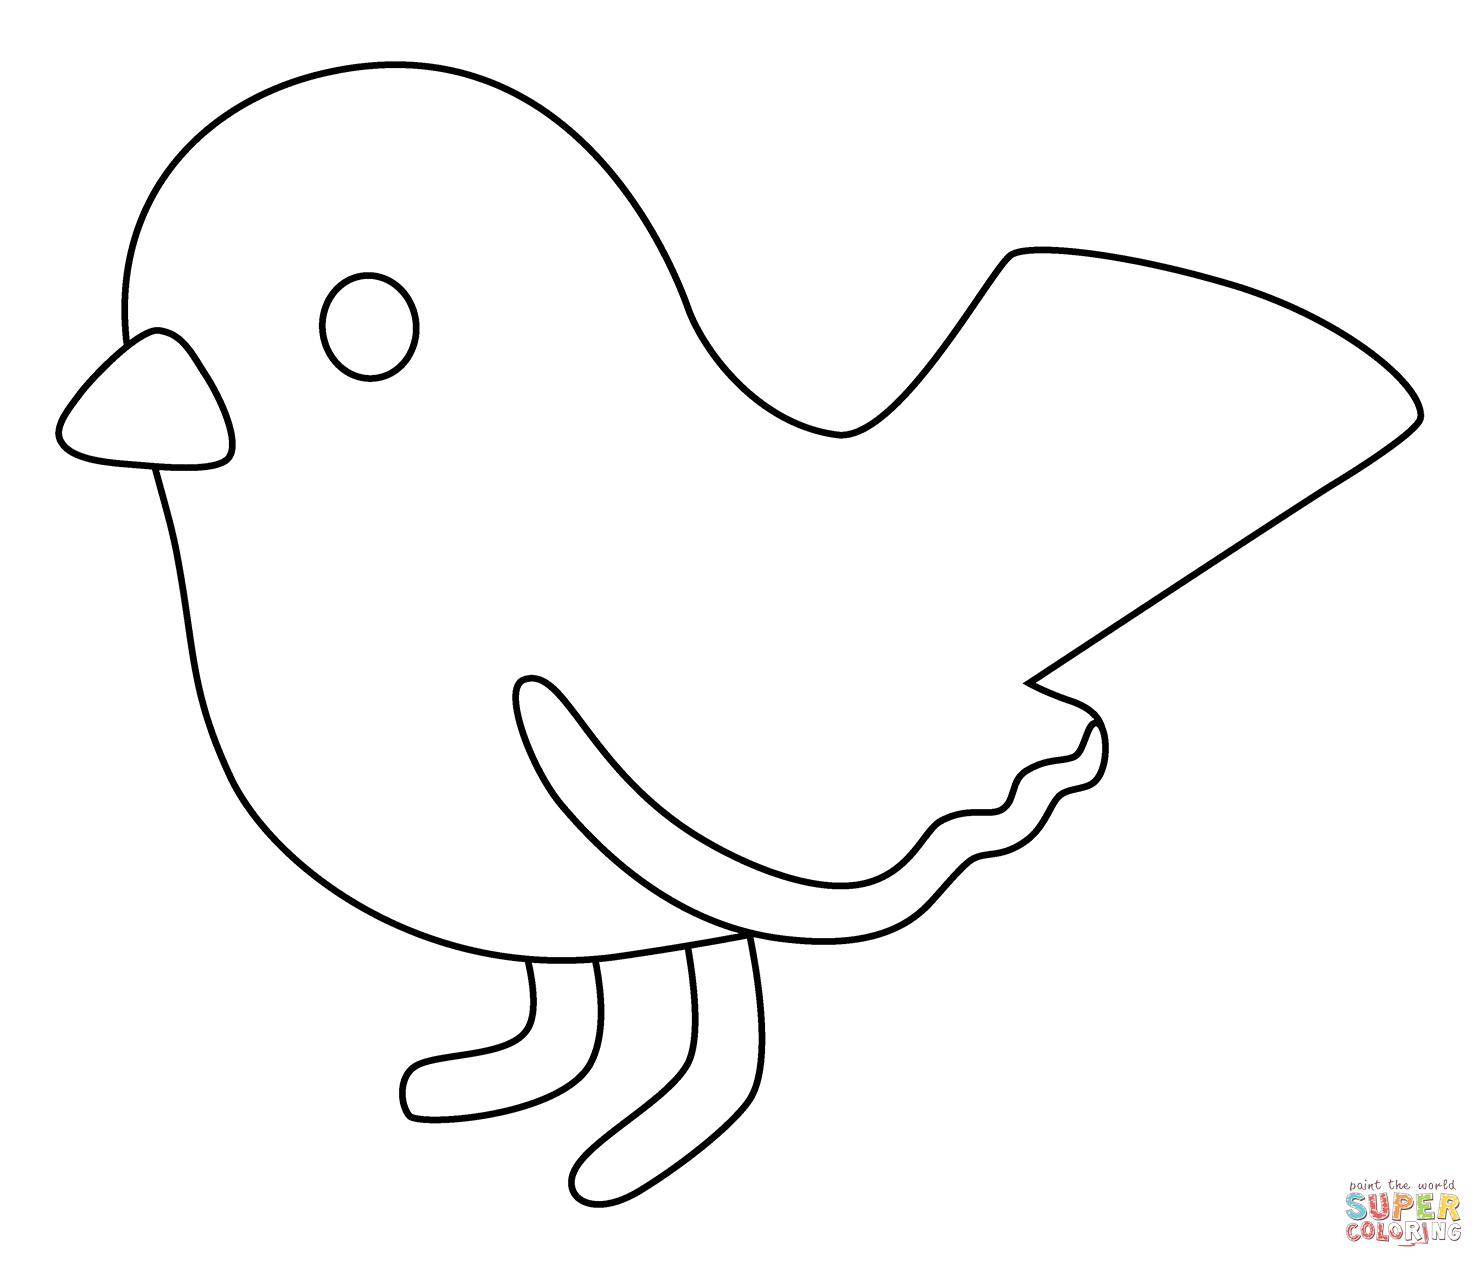 Bird emoji coloring page free printable coloring pages